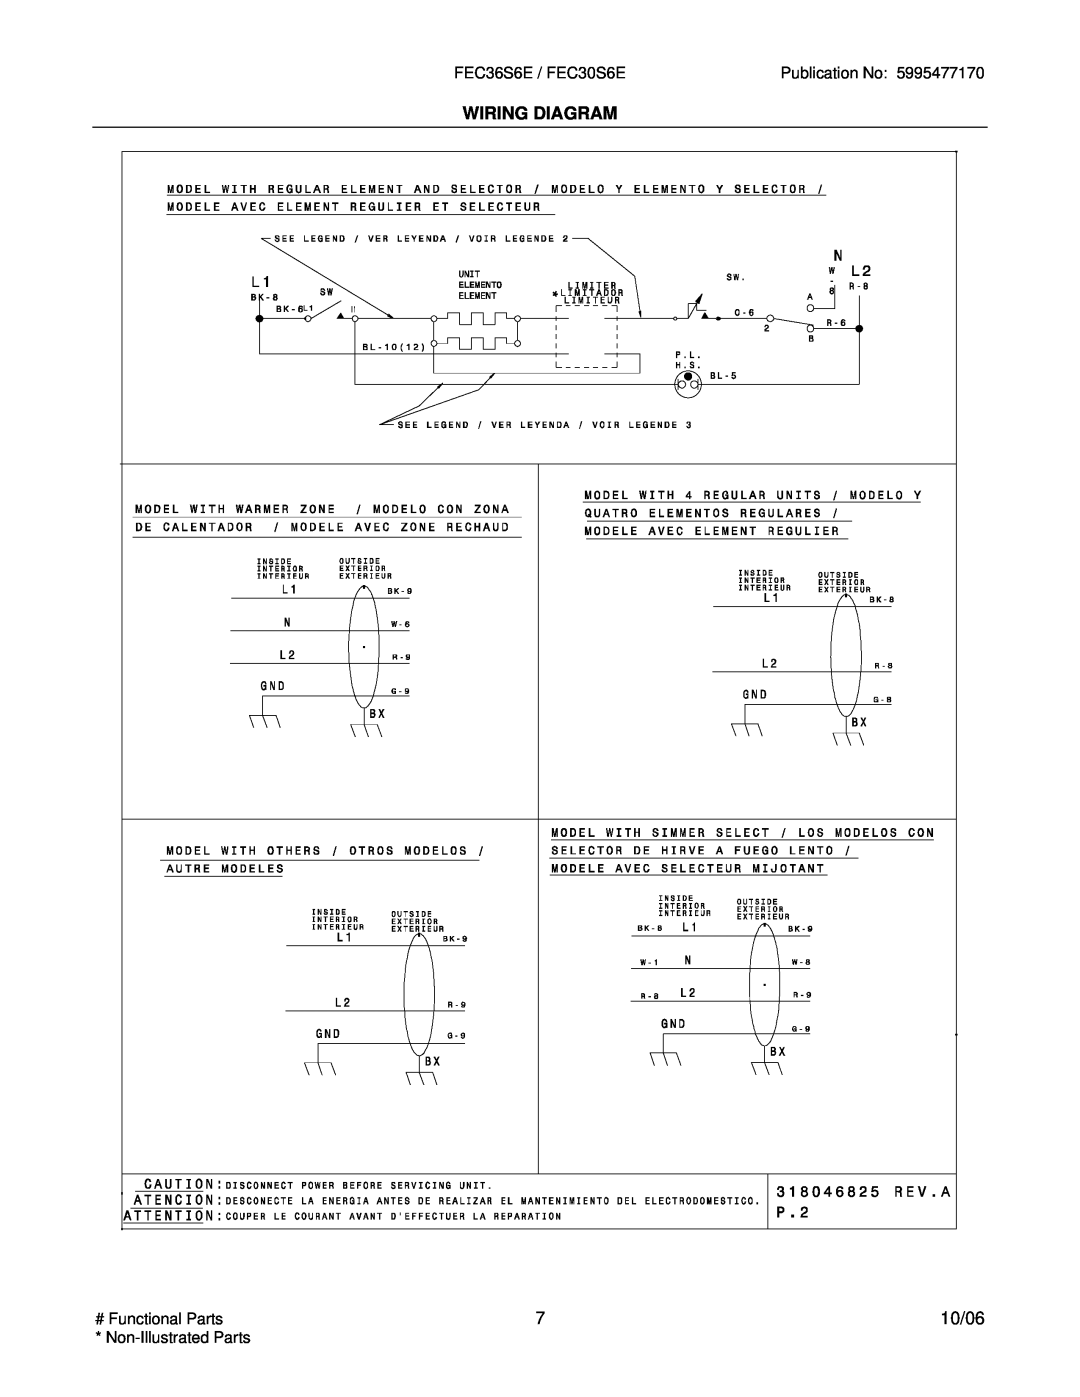 Electrolux FEC36S6E / FEC30S6E installation instructions Wiring Diagram, 10/06 